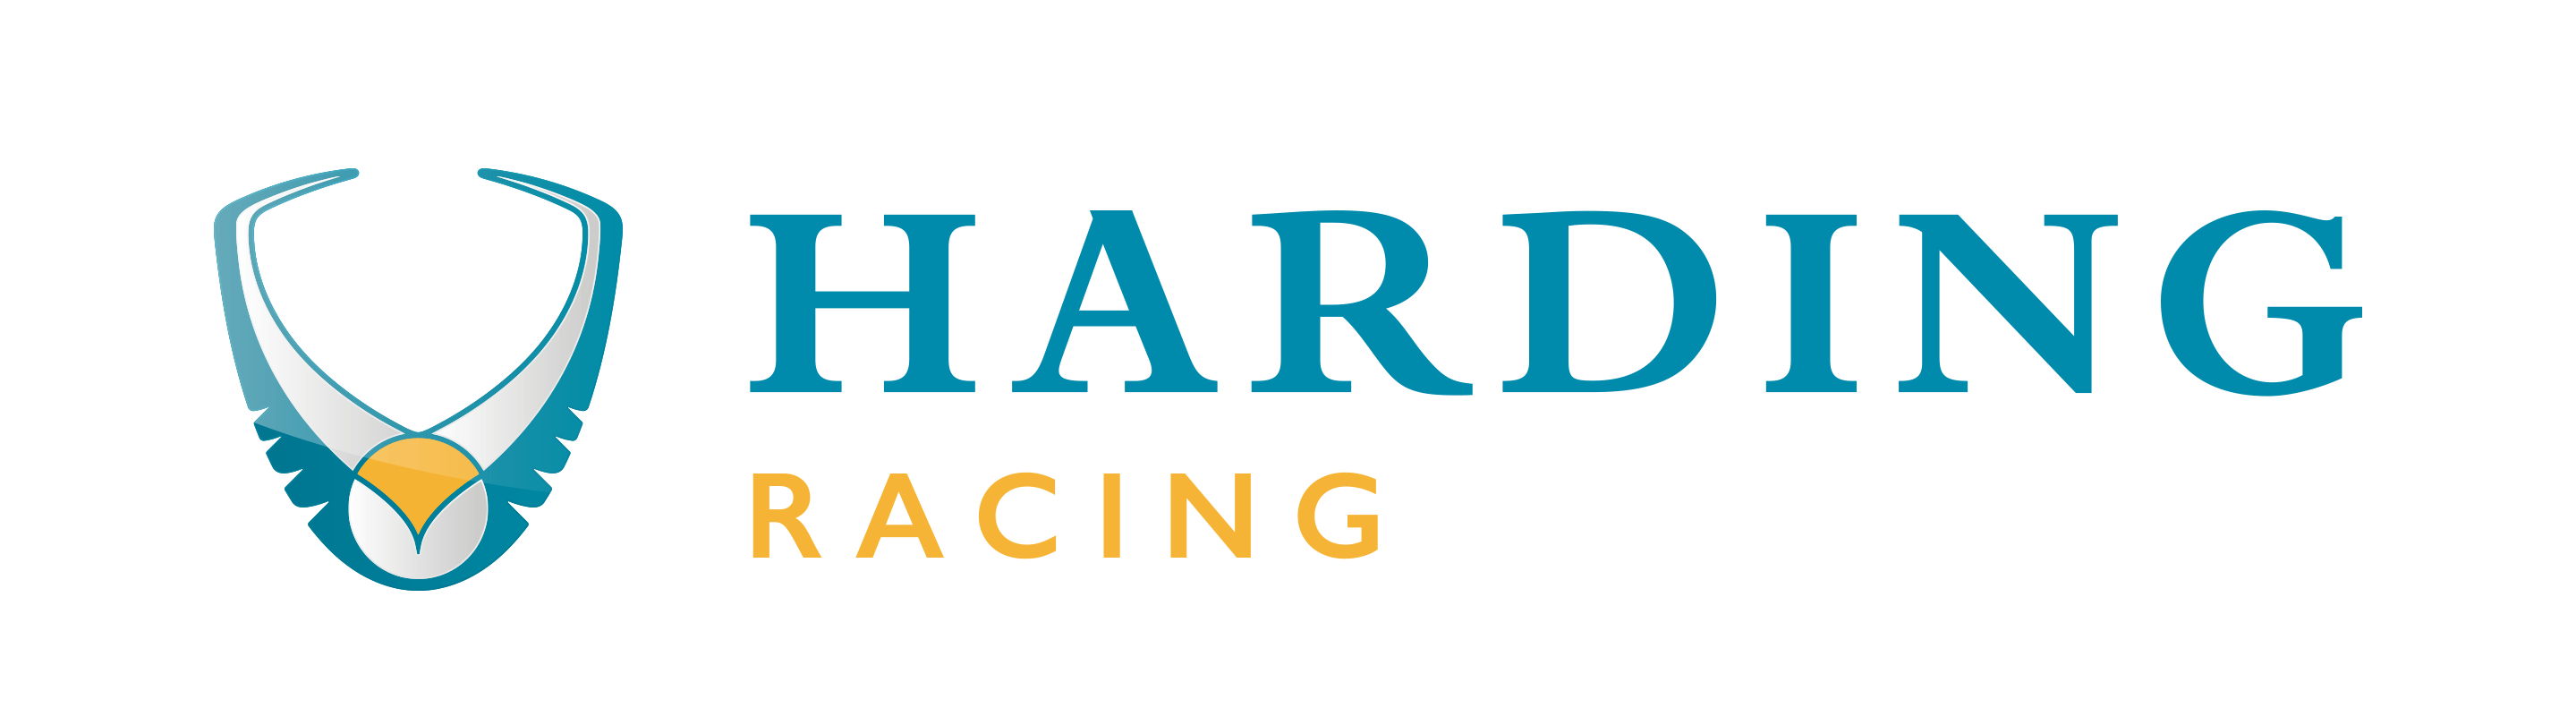 Family Racing Logo - Harding Racing